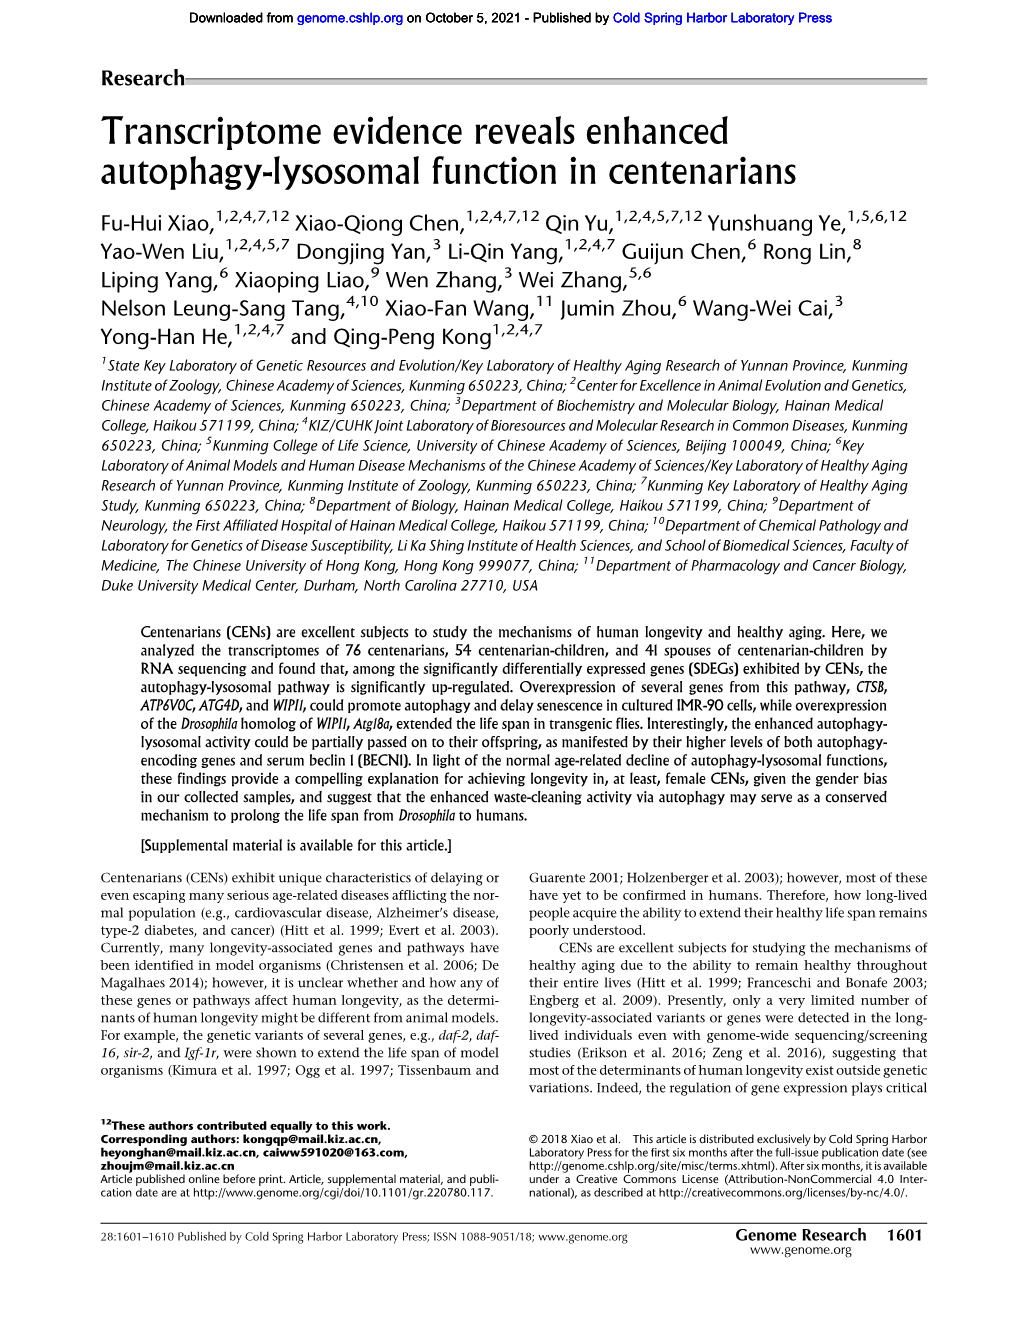 Transcriptome Evidence Reveals Enhanced Autophagy-Lysosomal Function in Centenarians